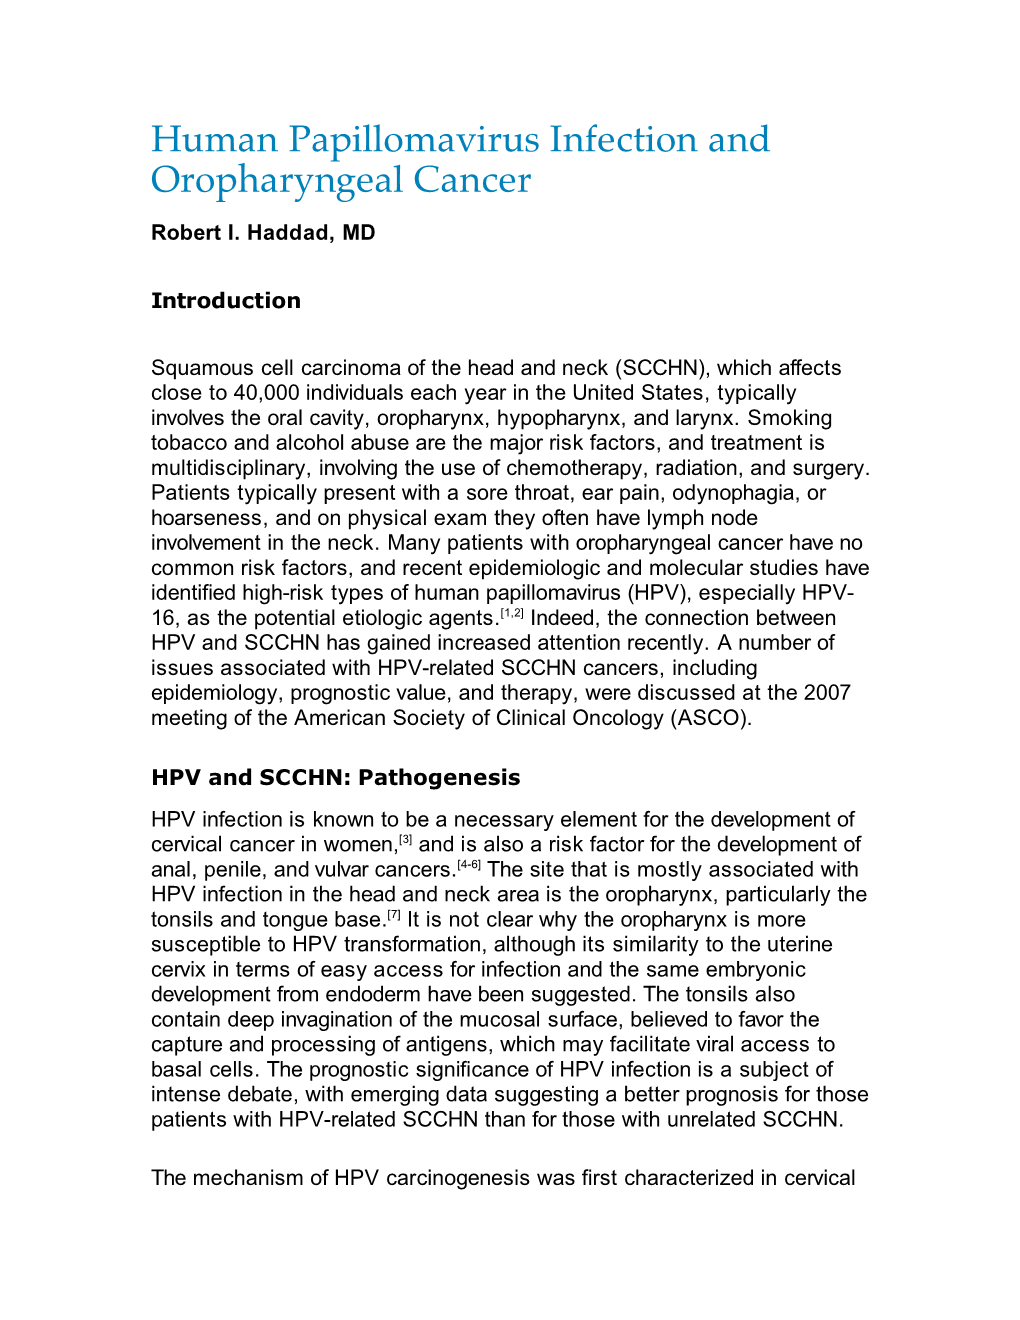 Human Papillomavirus Infection and Oropharyngeal Cancer Robert I